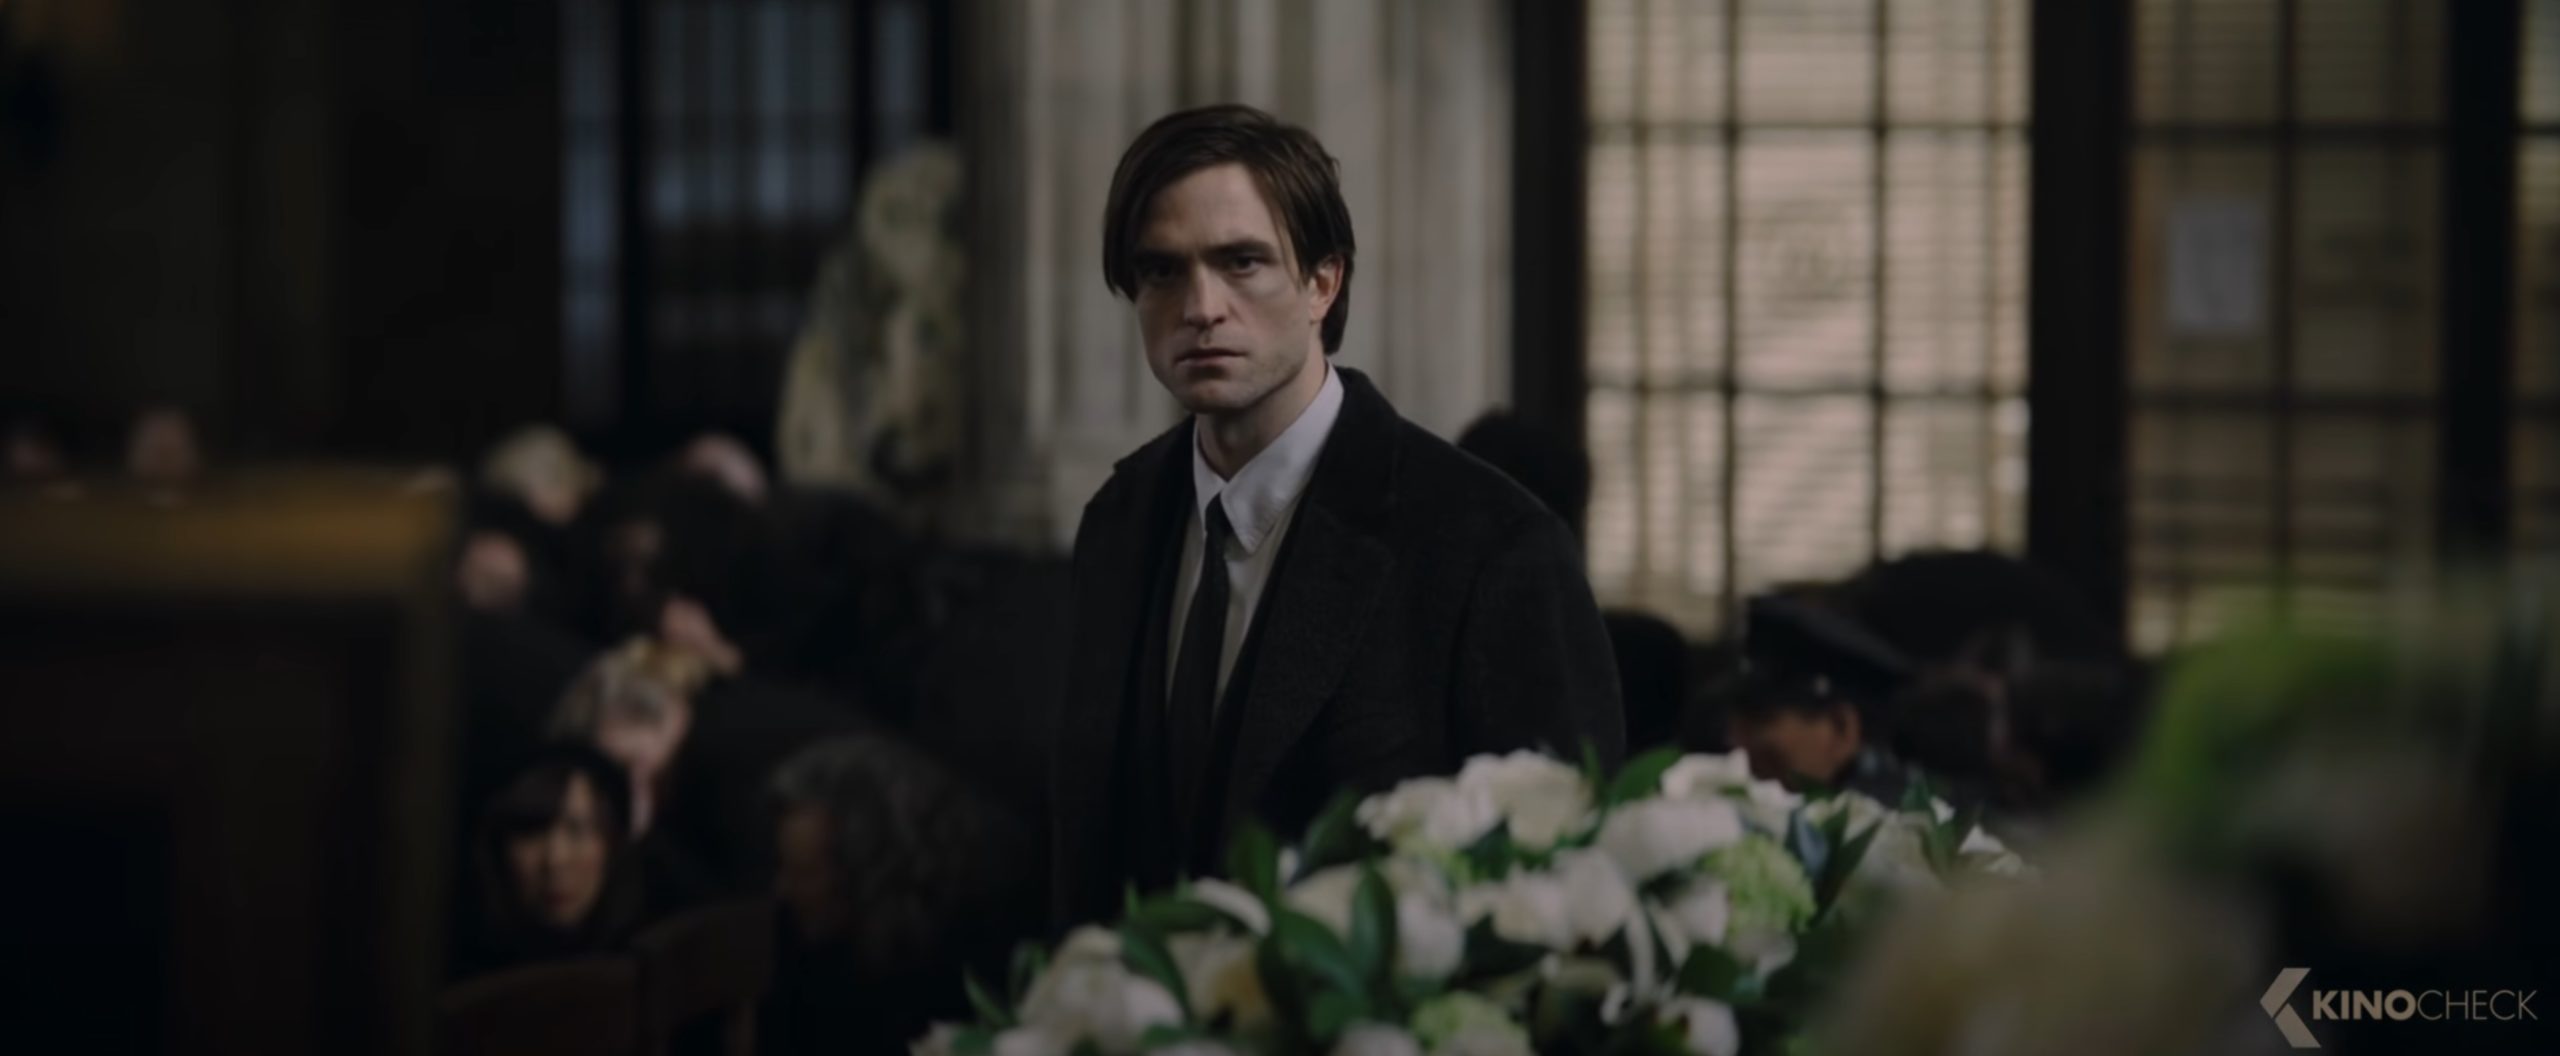 The Batman mit Robert Pattinson: Trailer-Kritik